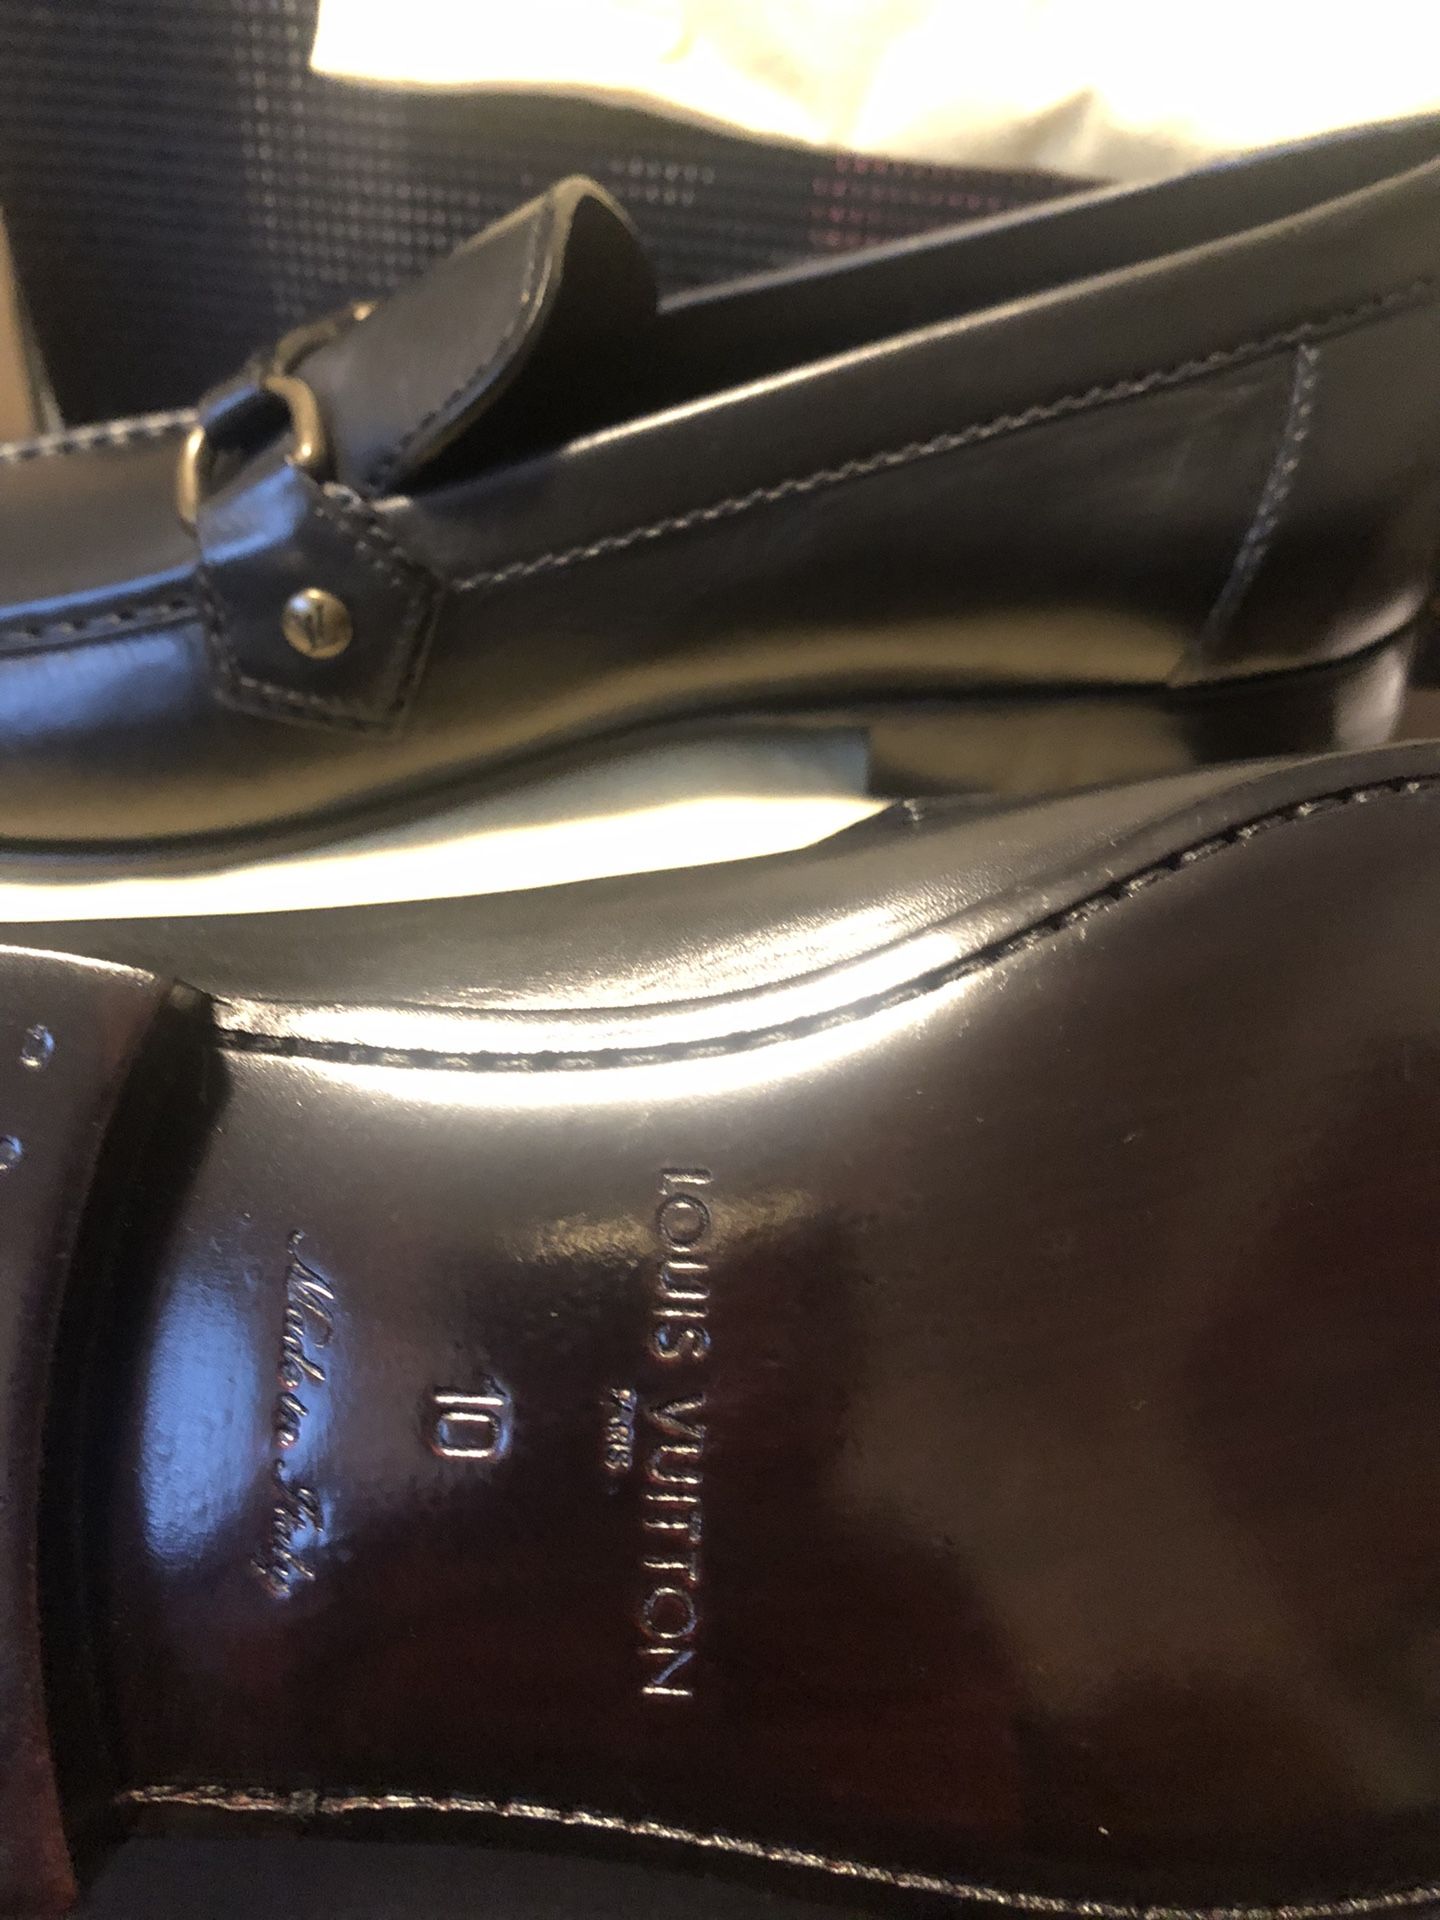 Louis Vuitton Men's Dress Shoes size 10 for Sale in Fontana, CA - OfferUp